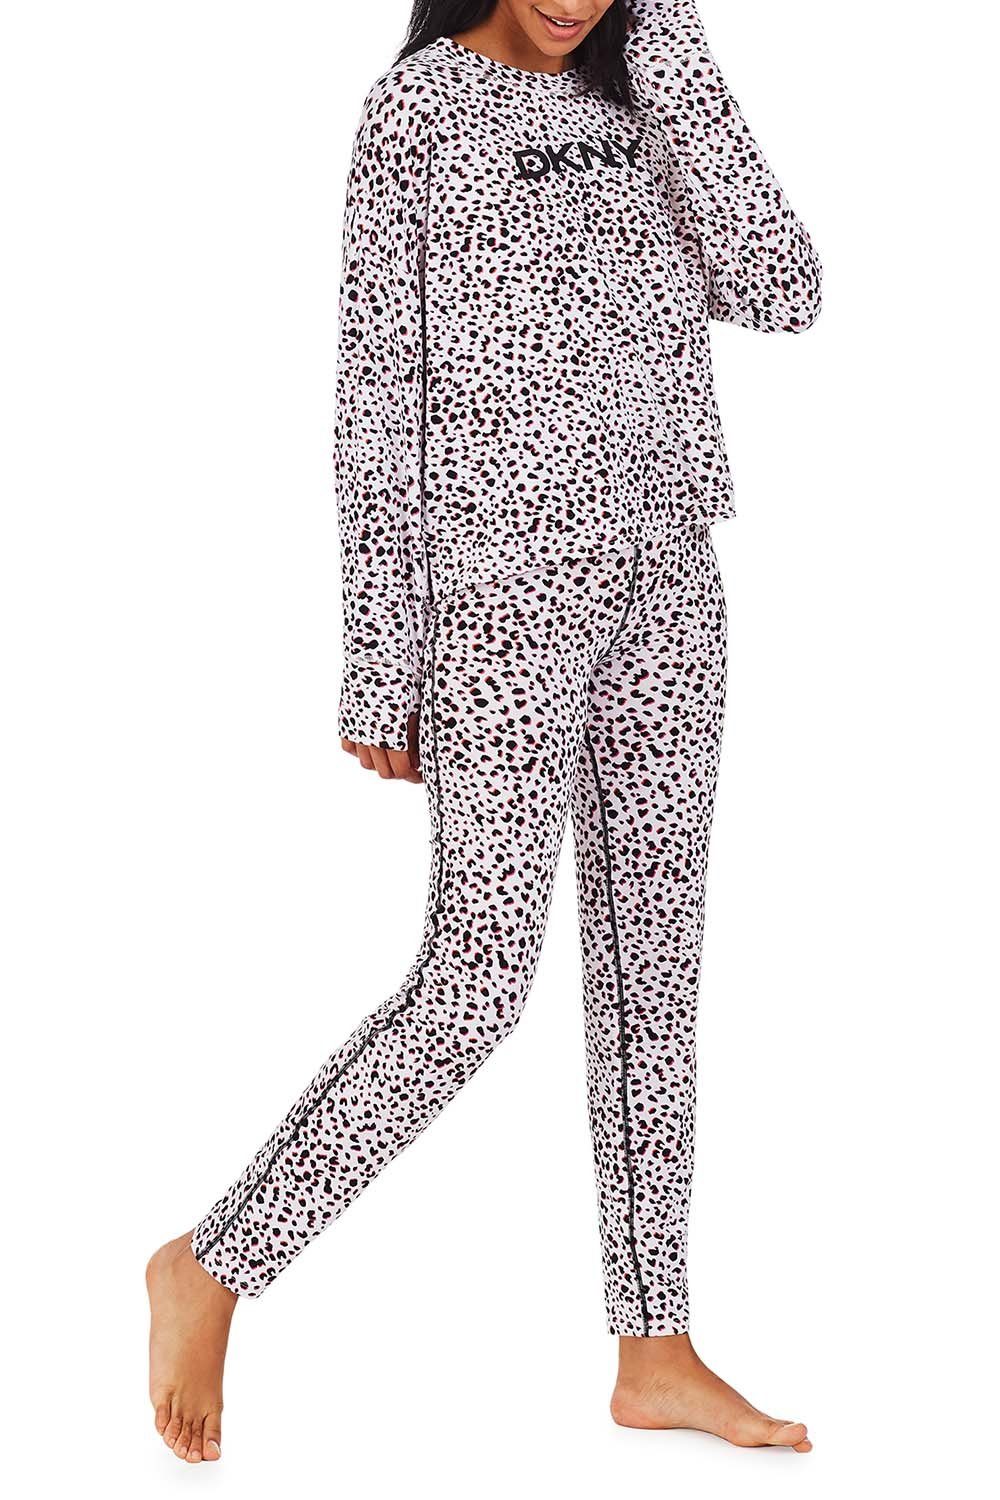 & Set Top DKNY YI2922523 Pyjama Legging